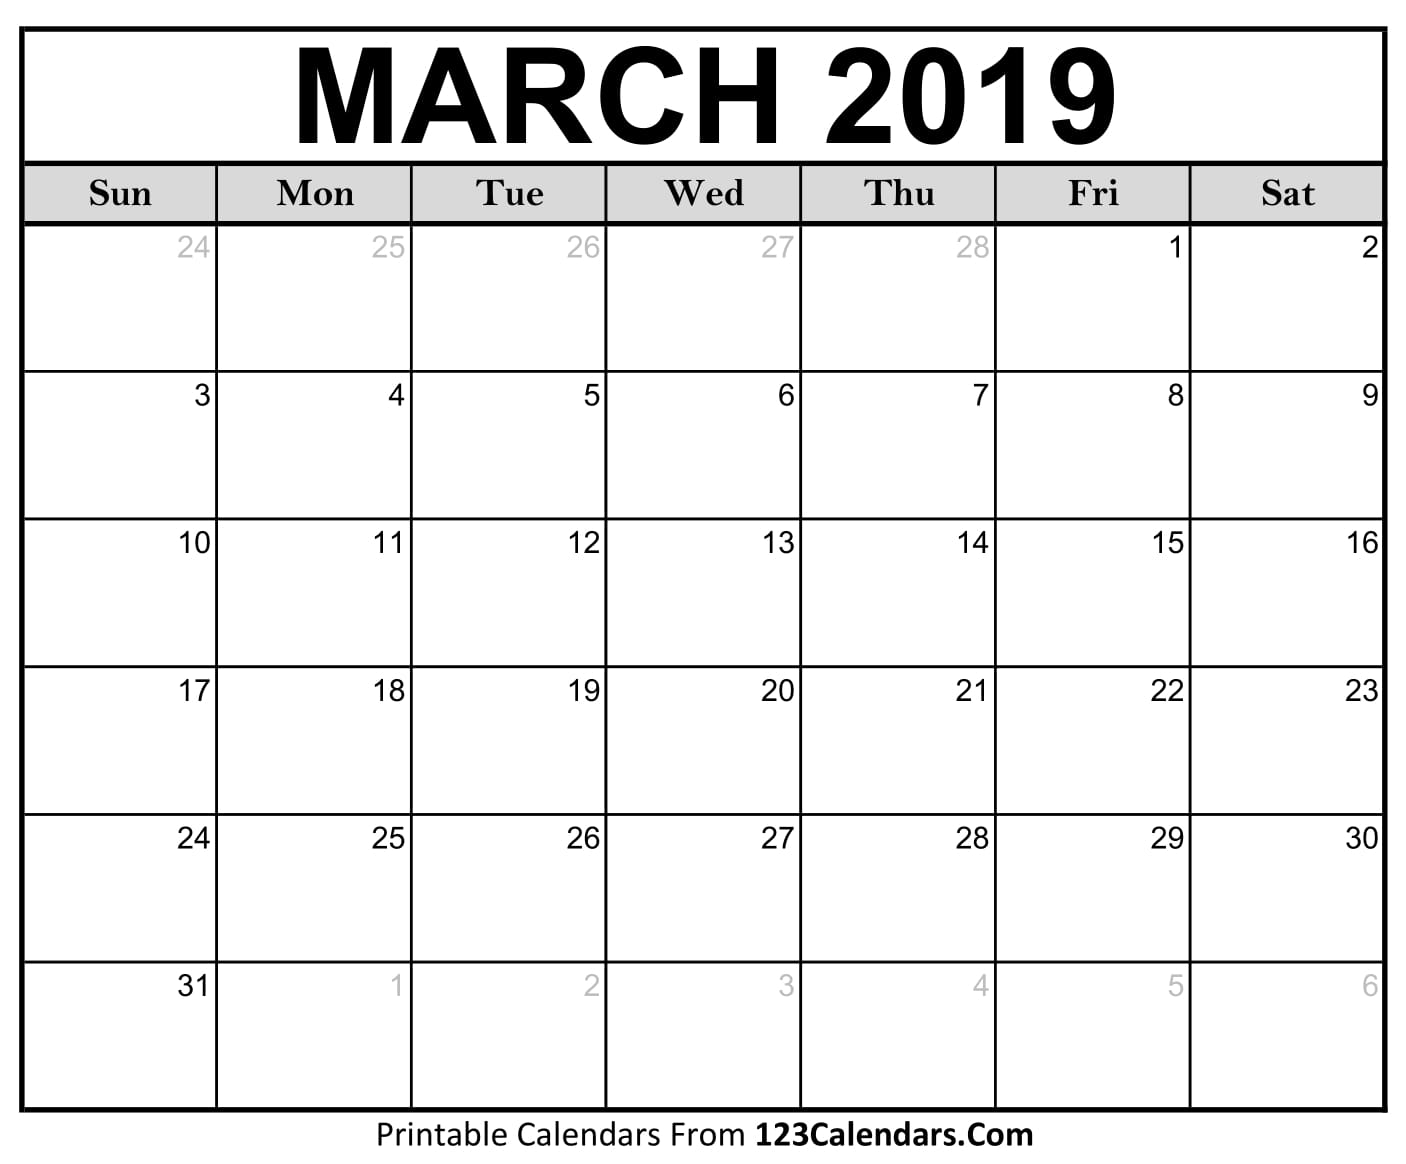 march-2019-calendar-blank-easily-printable-123calendars